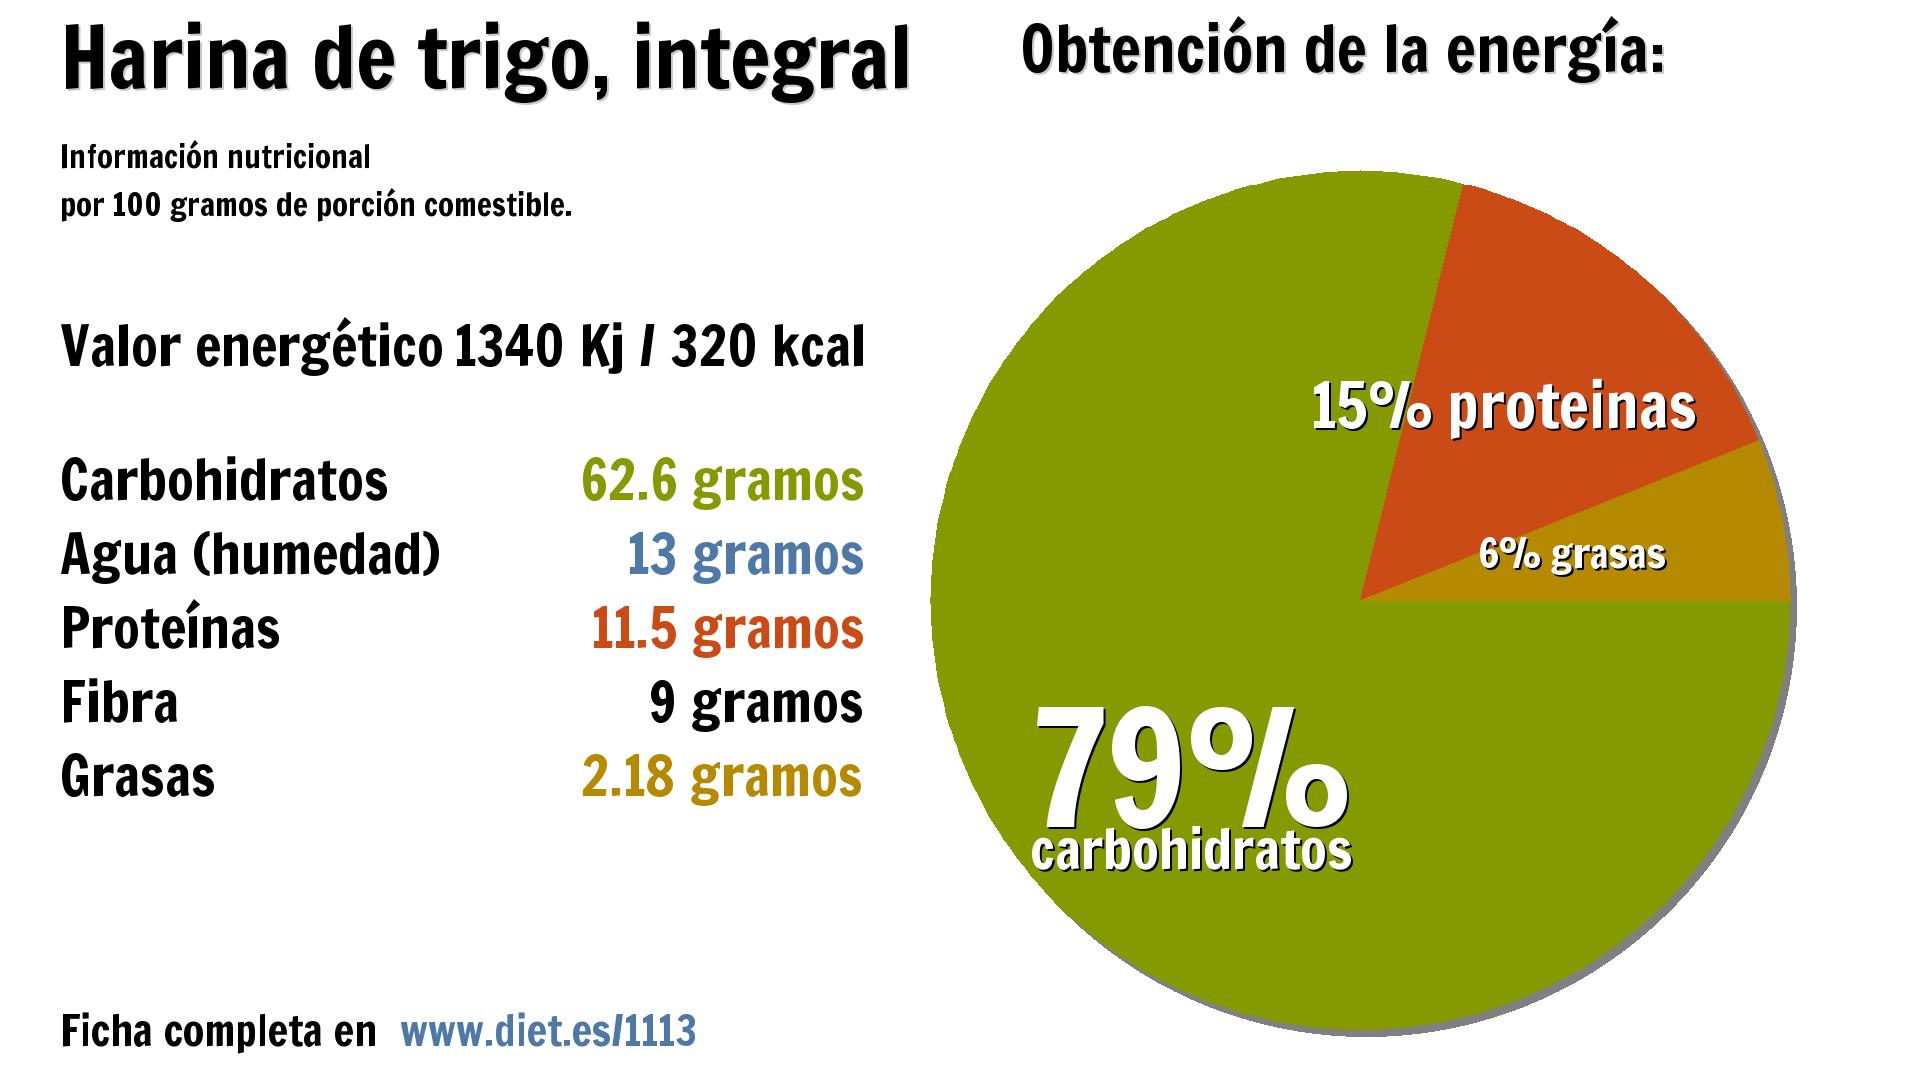 Harina de trigo, integral: energía 1340 Kj, carbohidratos 63 g., agua 13 g., proteínas 12 g., fibra 9 g. y grasas 2 g.